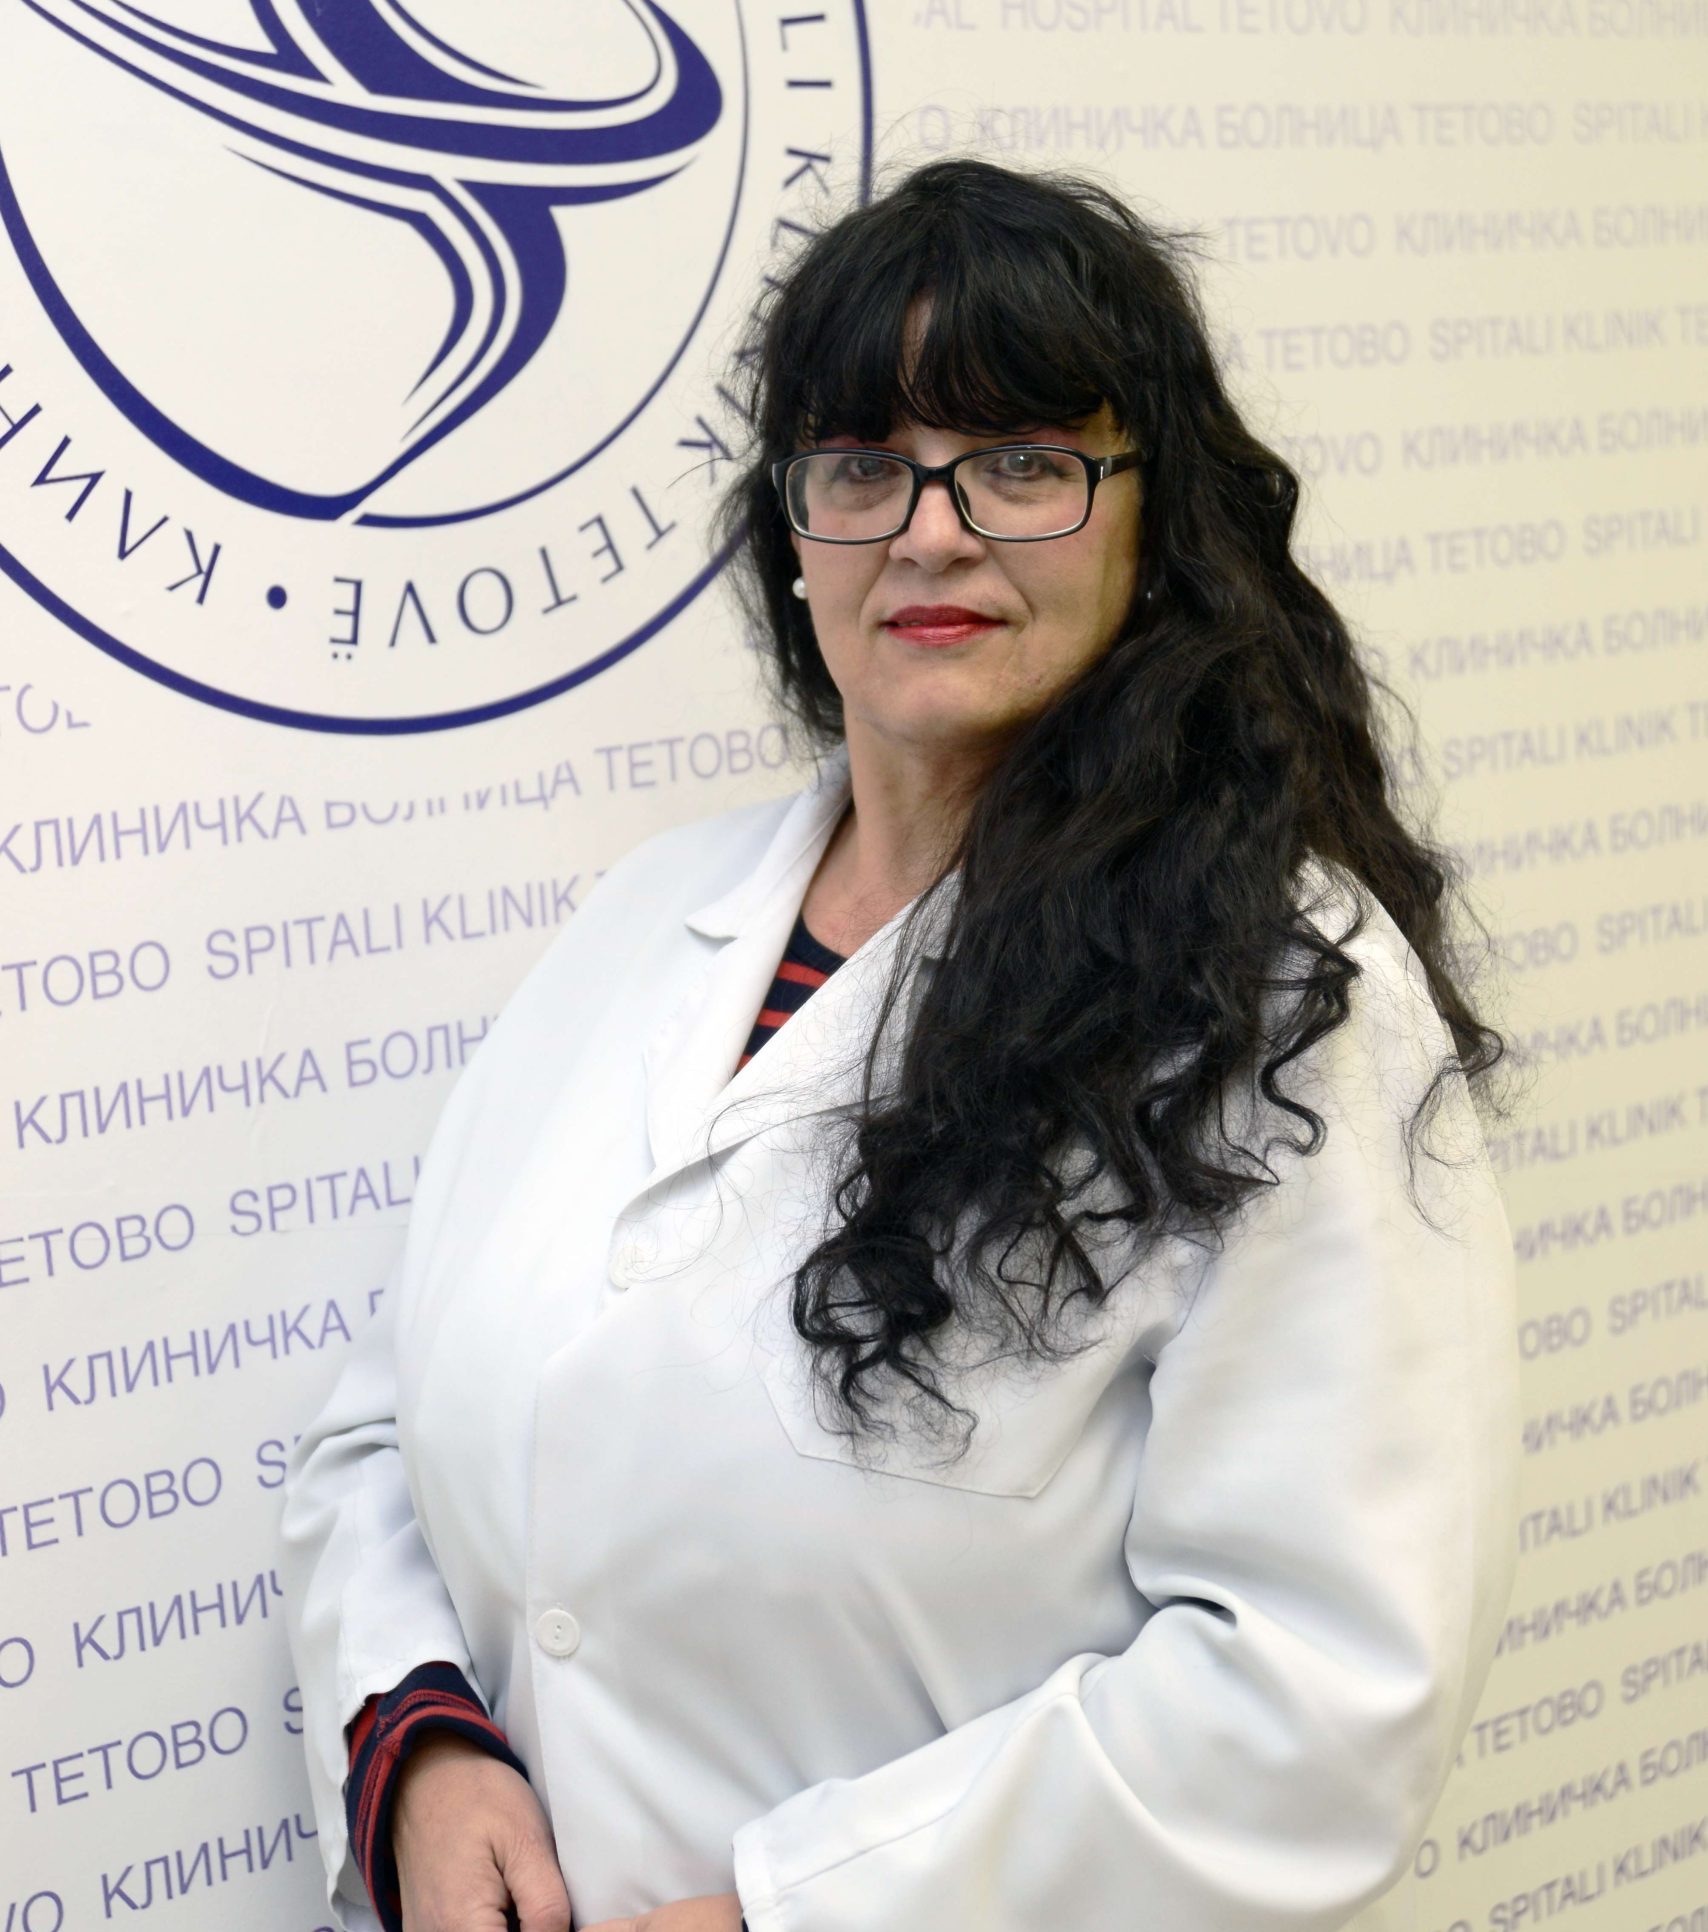 MSc in Pharmacy Mirka Popivanovska Shukas